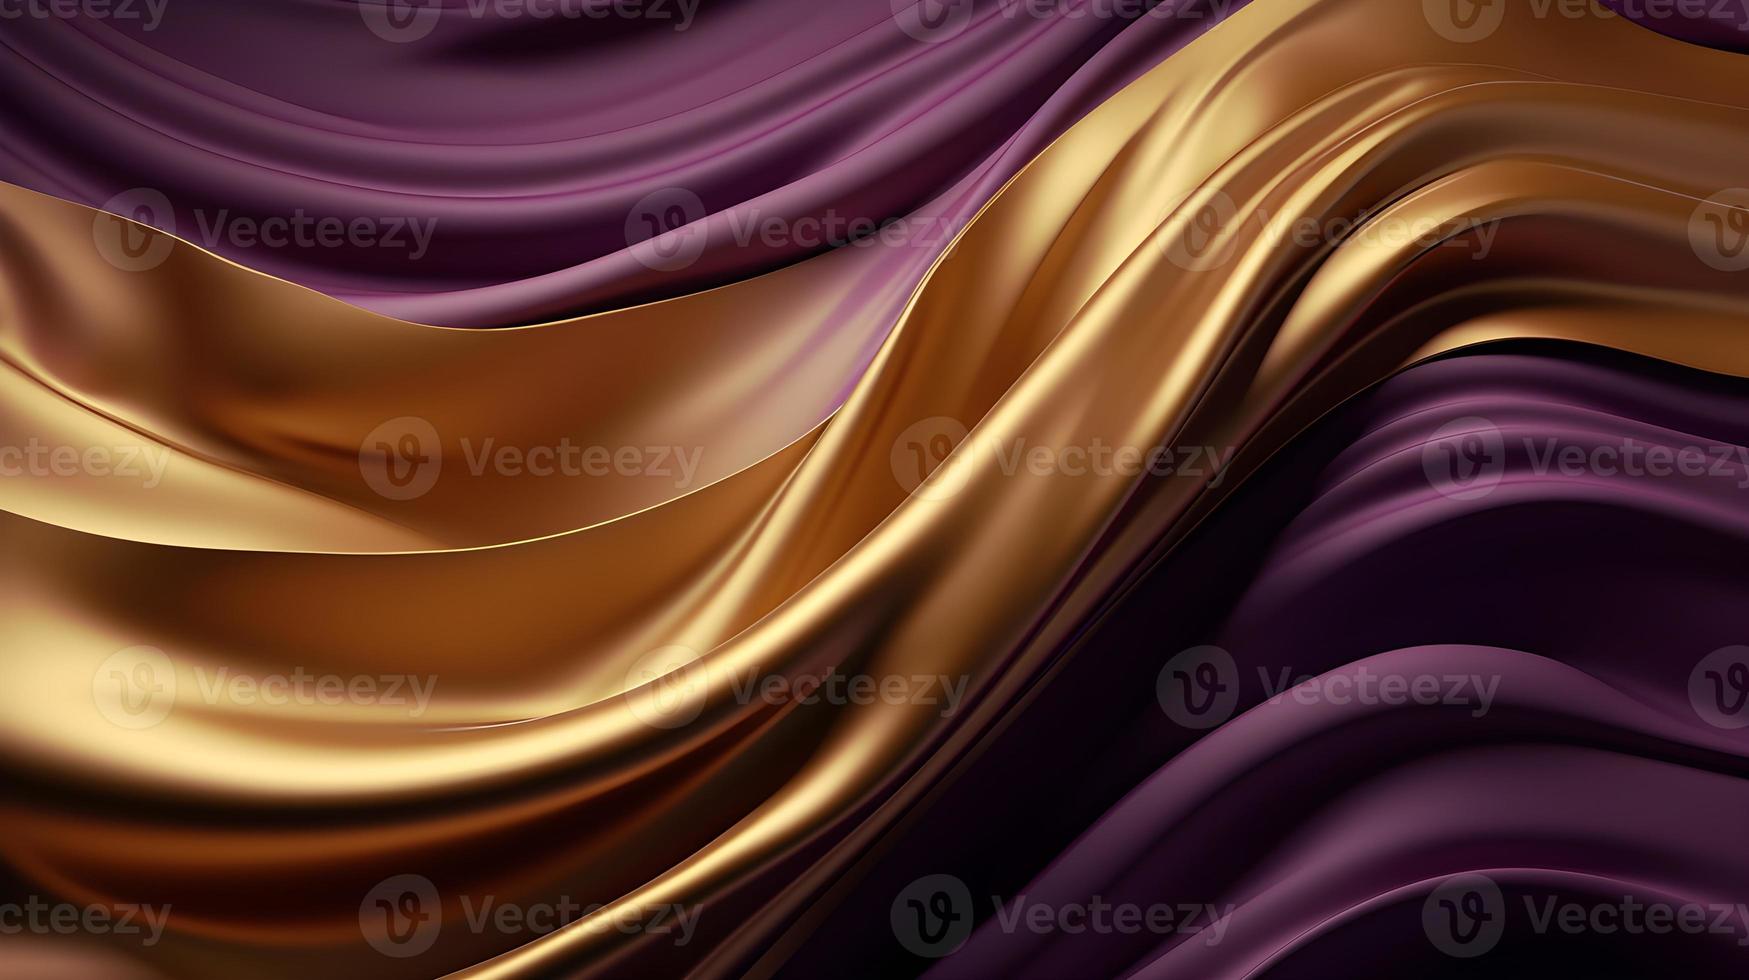 3d onda brilhante ouro e roxa gradiente seda tecido abstrato fundo foto